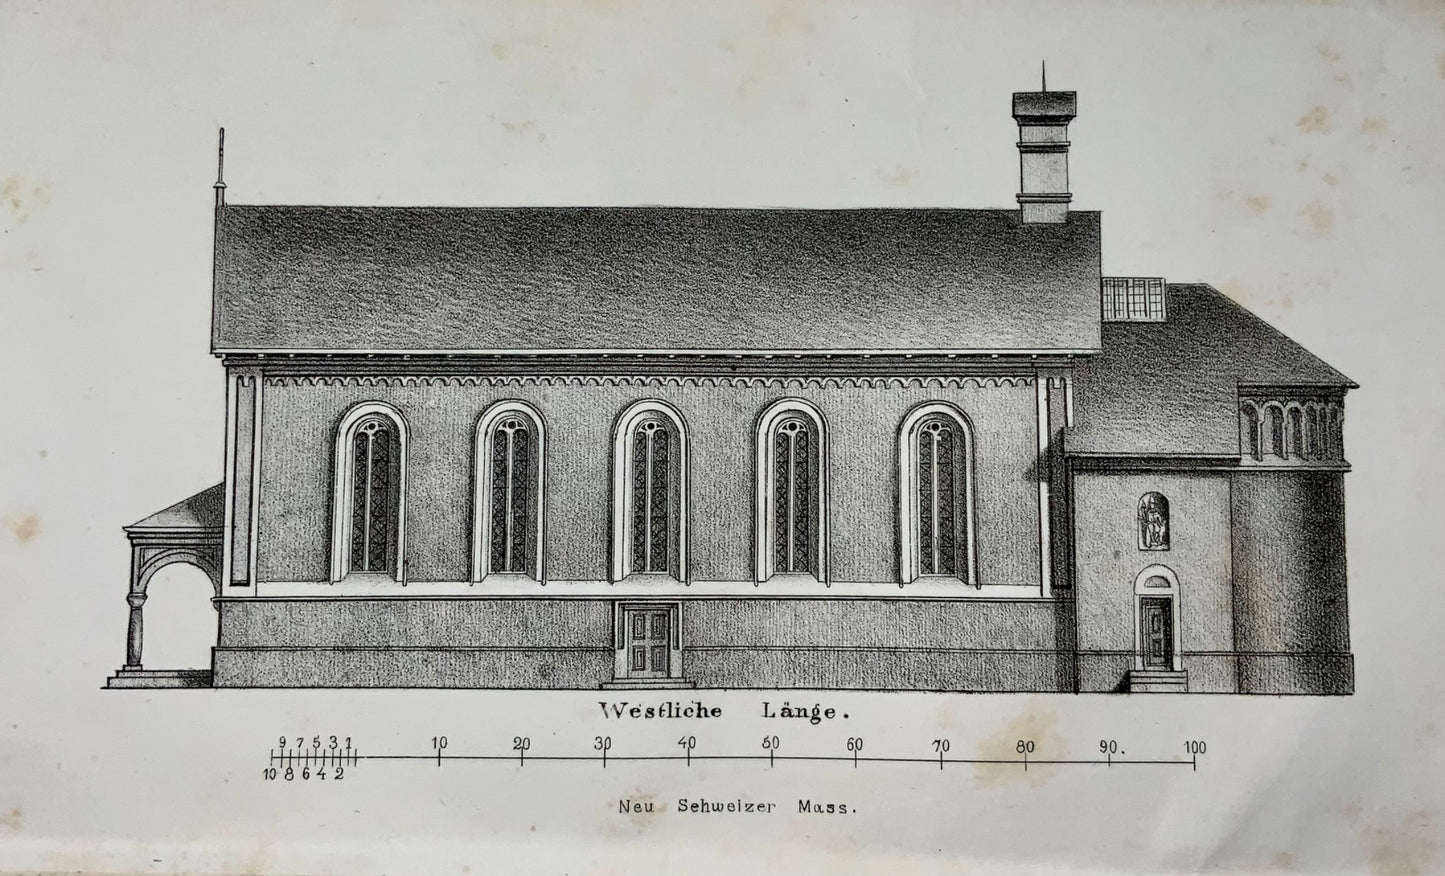 1852 Architettura delle chiese rurali in Svizzera. Christliche Baukunst, X. Herzog, libro